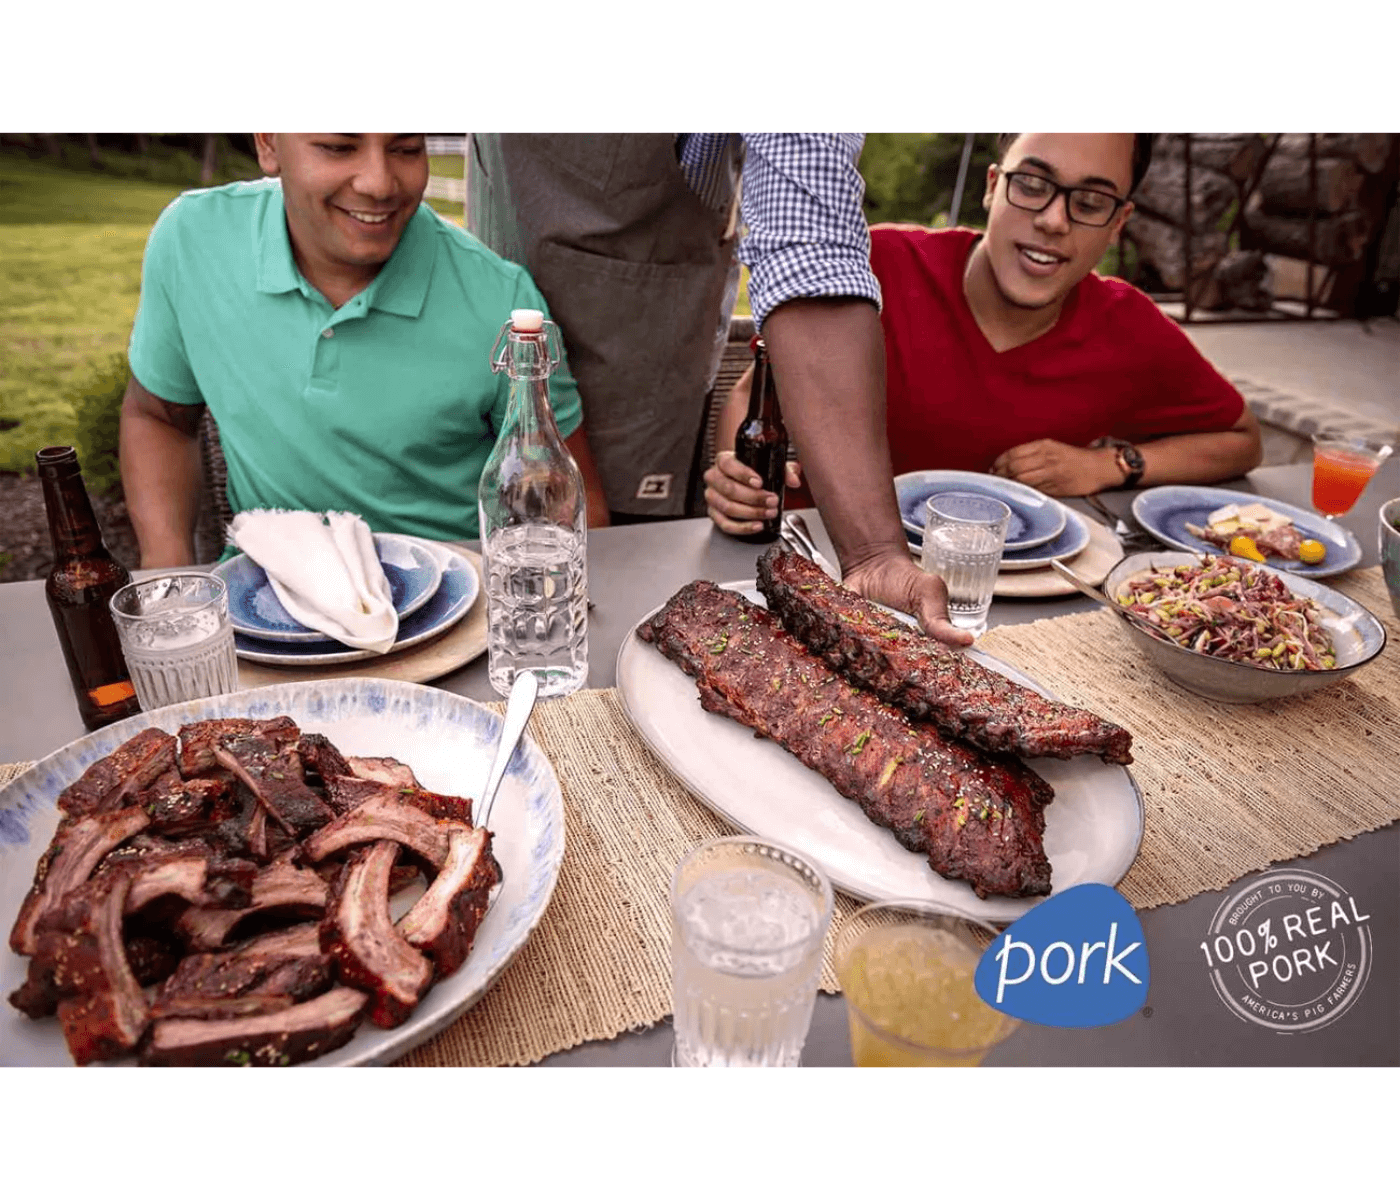 Consorcio Real Pork: Estrategia comunicacional que impulsa la carne de cerdo